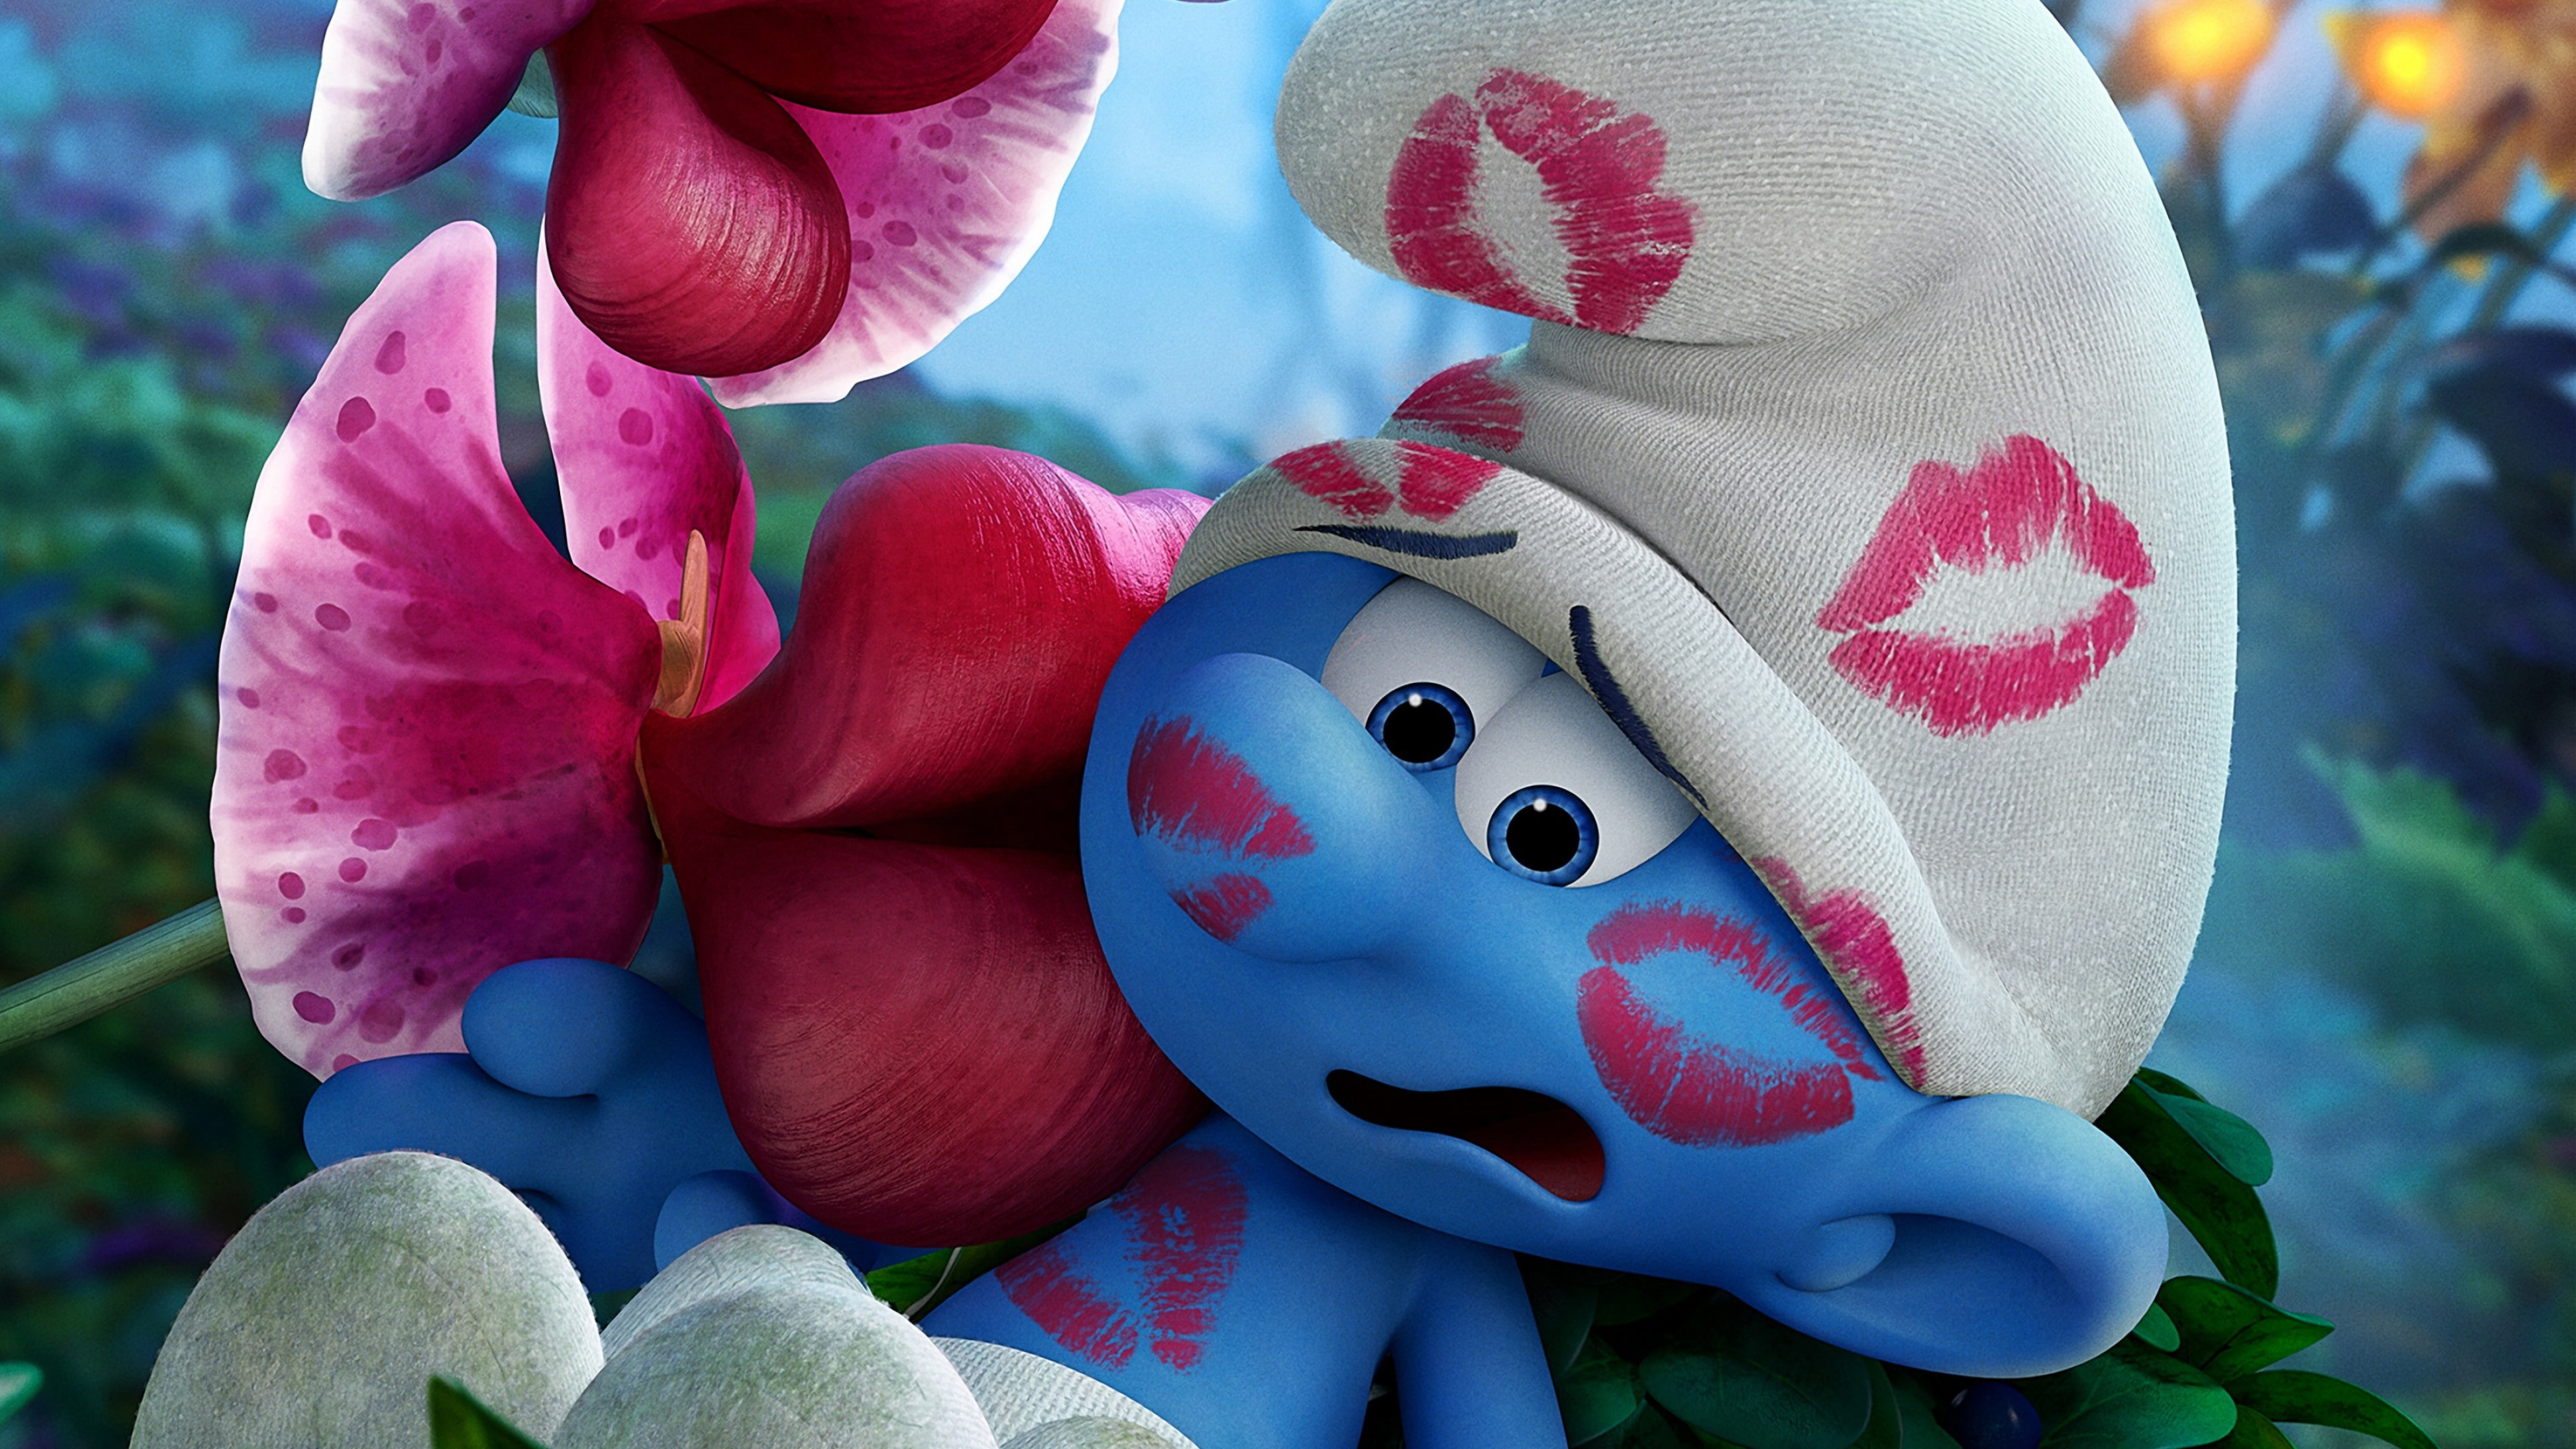 Smurf movie clip, Smurfs: The Lost Village, Clumsy, best animation movies